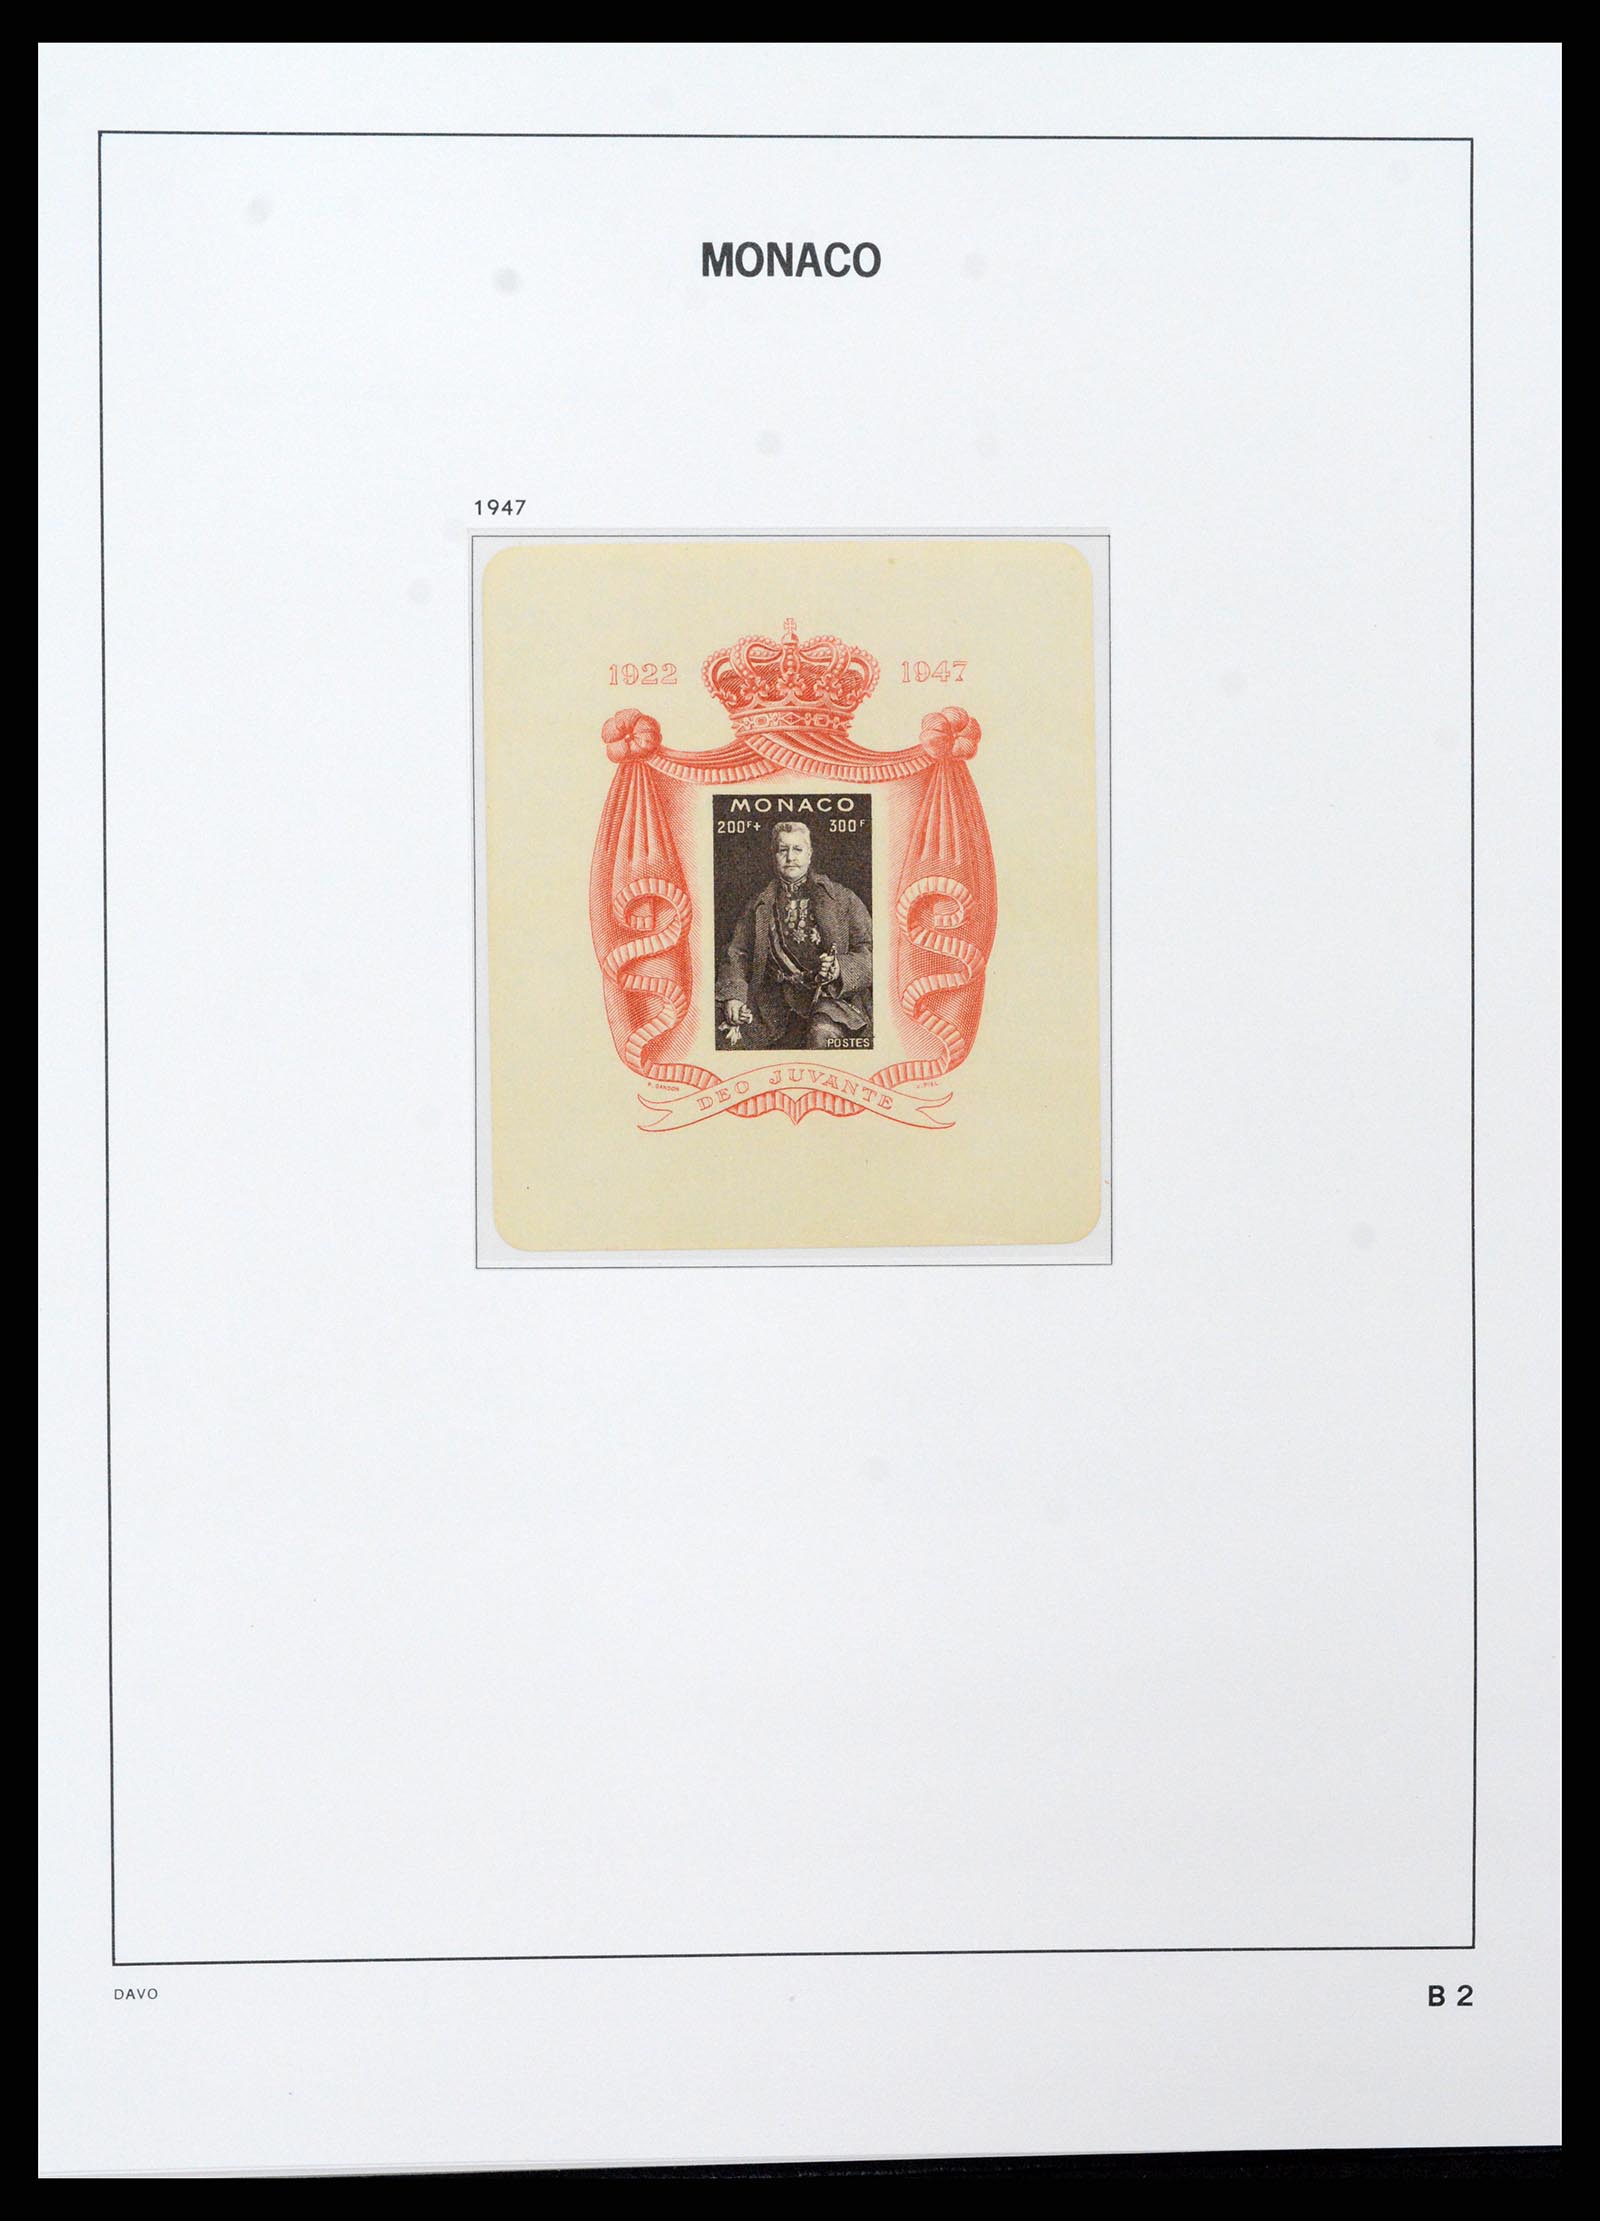 37279 068 - Stamp collection 37279 Monaco 1885-1969.